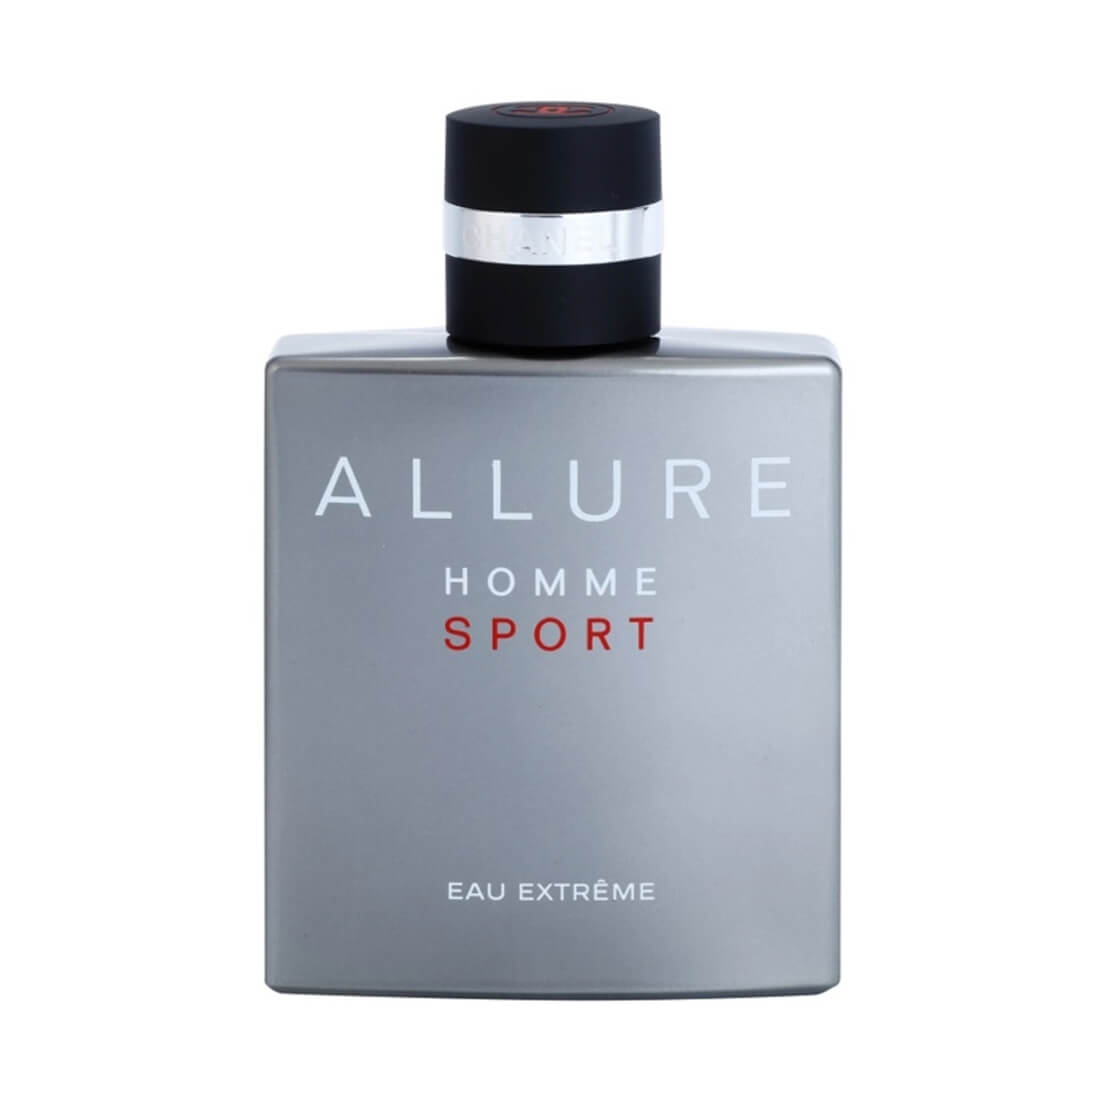 ALLURE HOMME SPORT EAU EXTRÊME - Fragrance